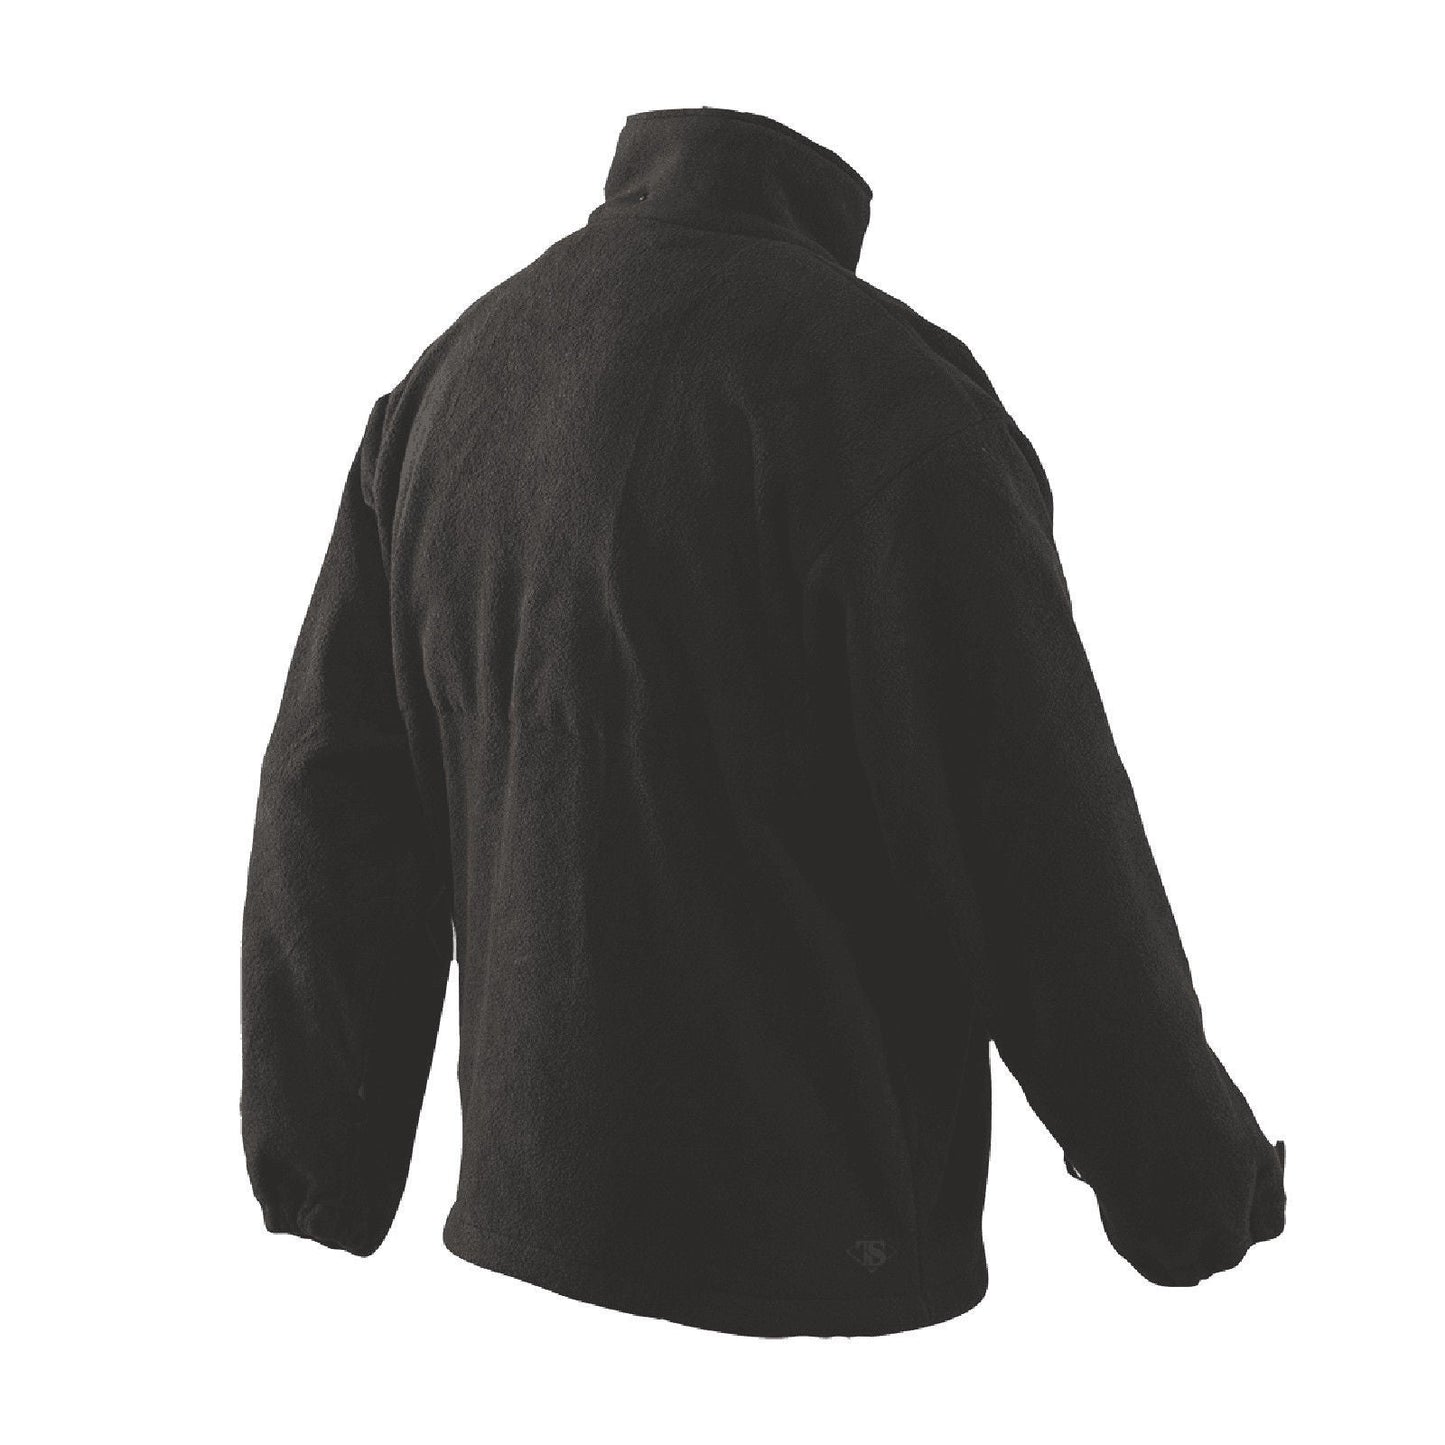 Tru-Spec Polar Fleece Jacket - 100% Polyester Microfleece